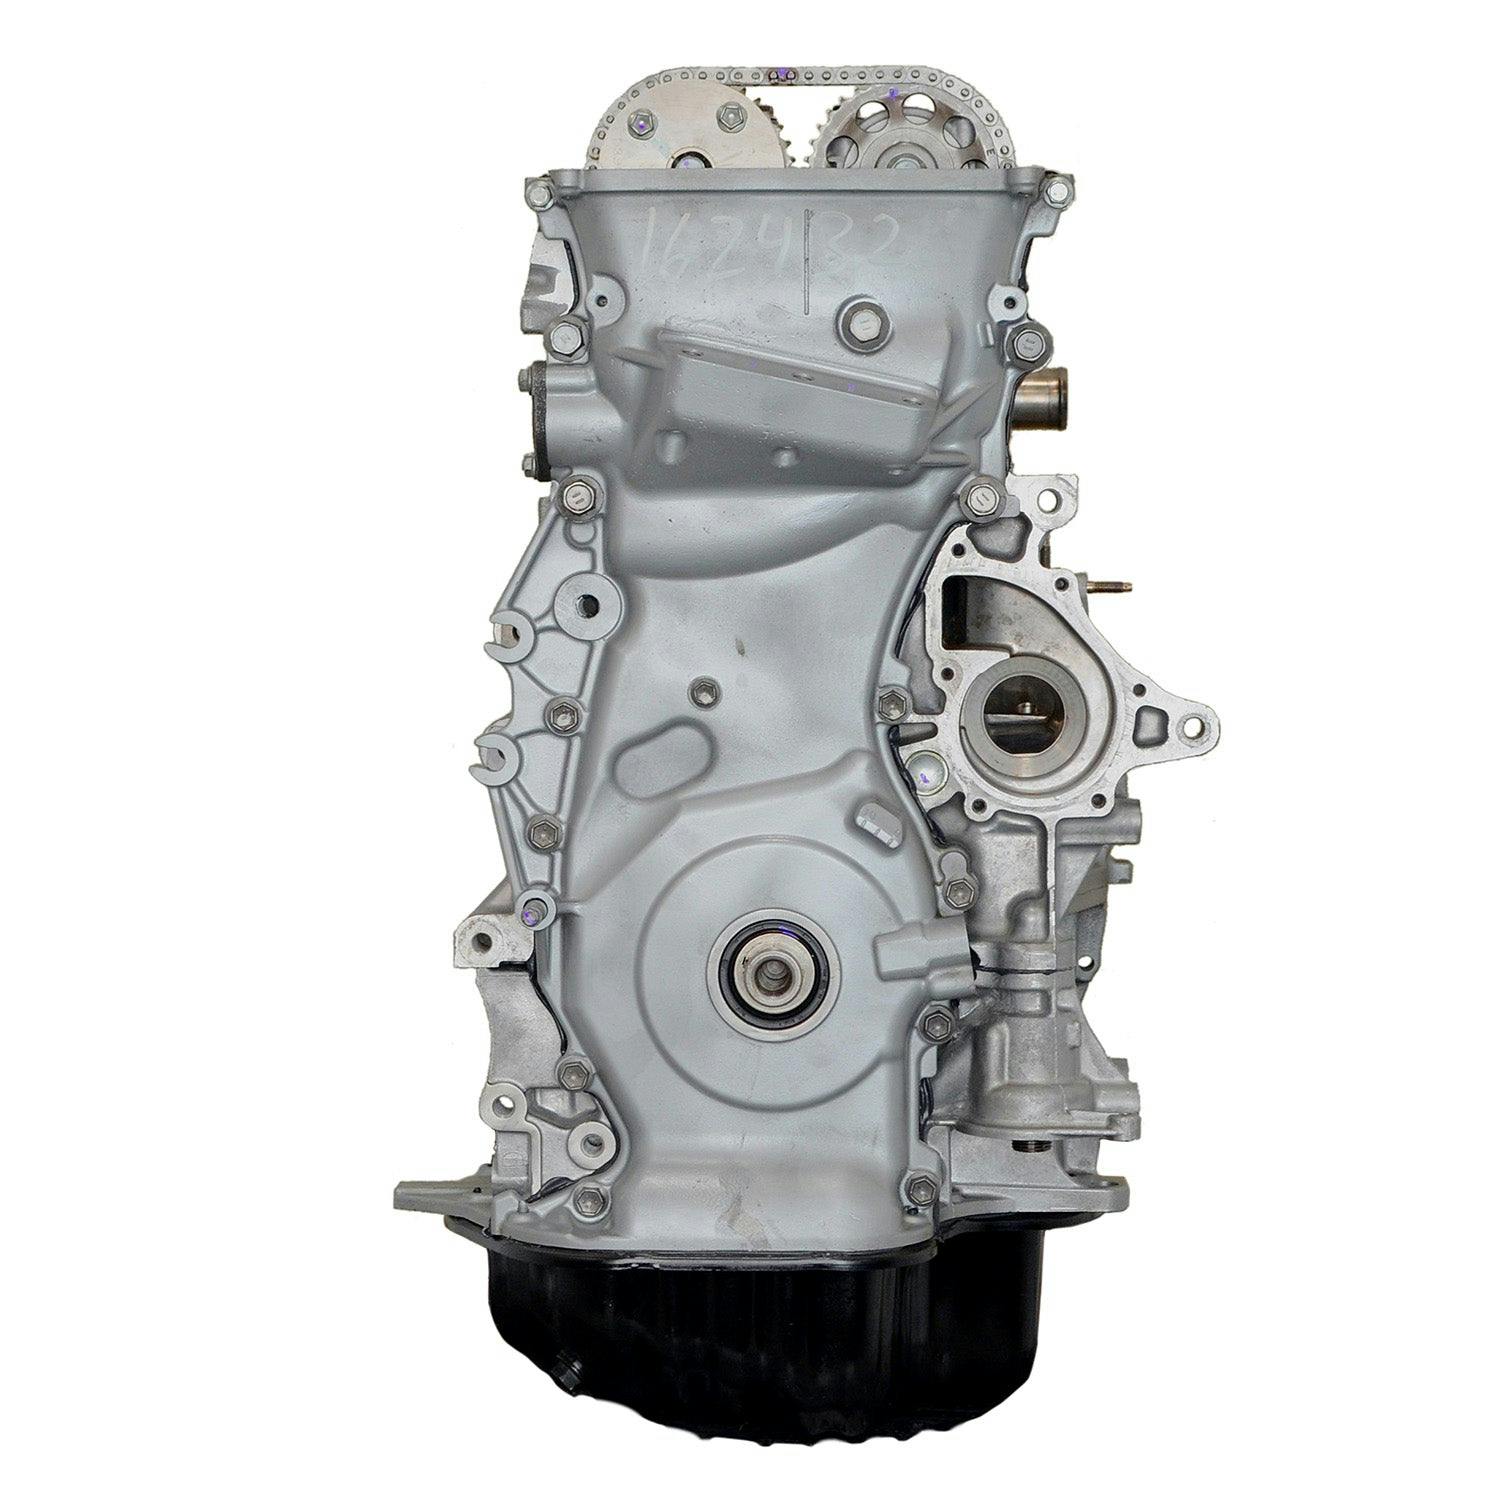 2.4L Inline-4 Engine for 2001-2007 Toyota Camry/Highlander/Solara